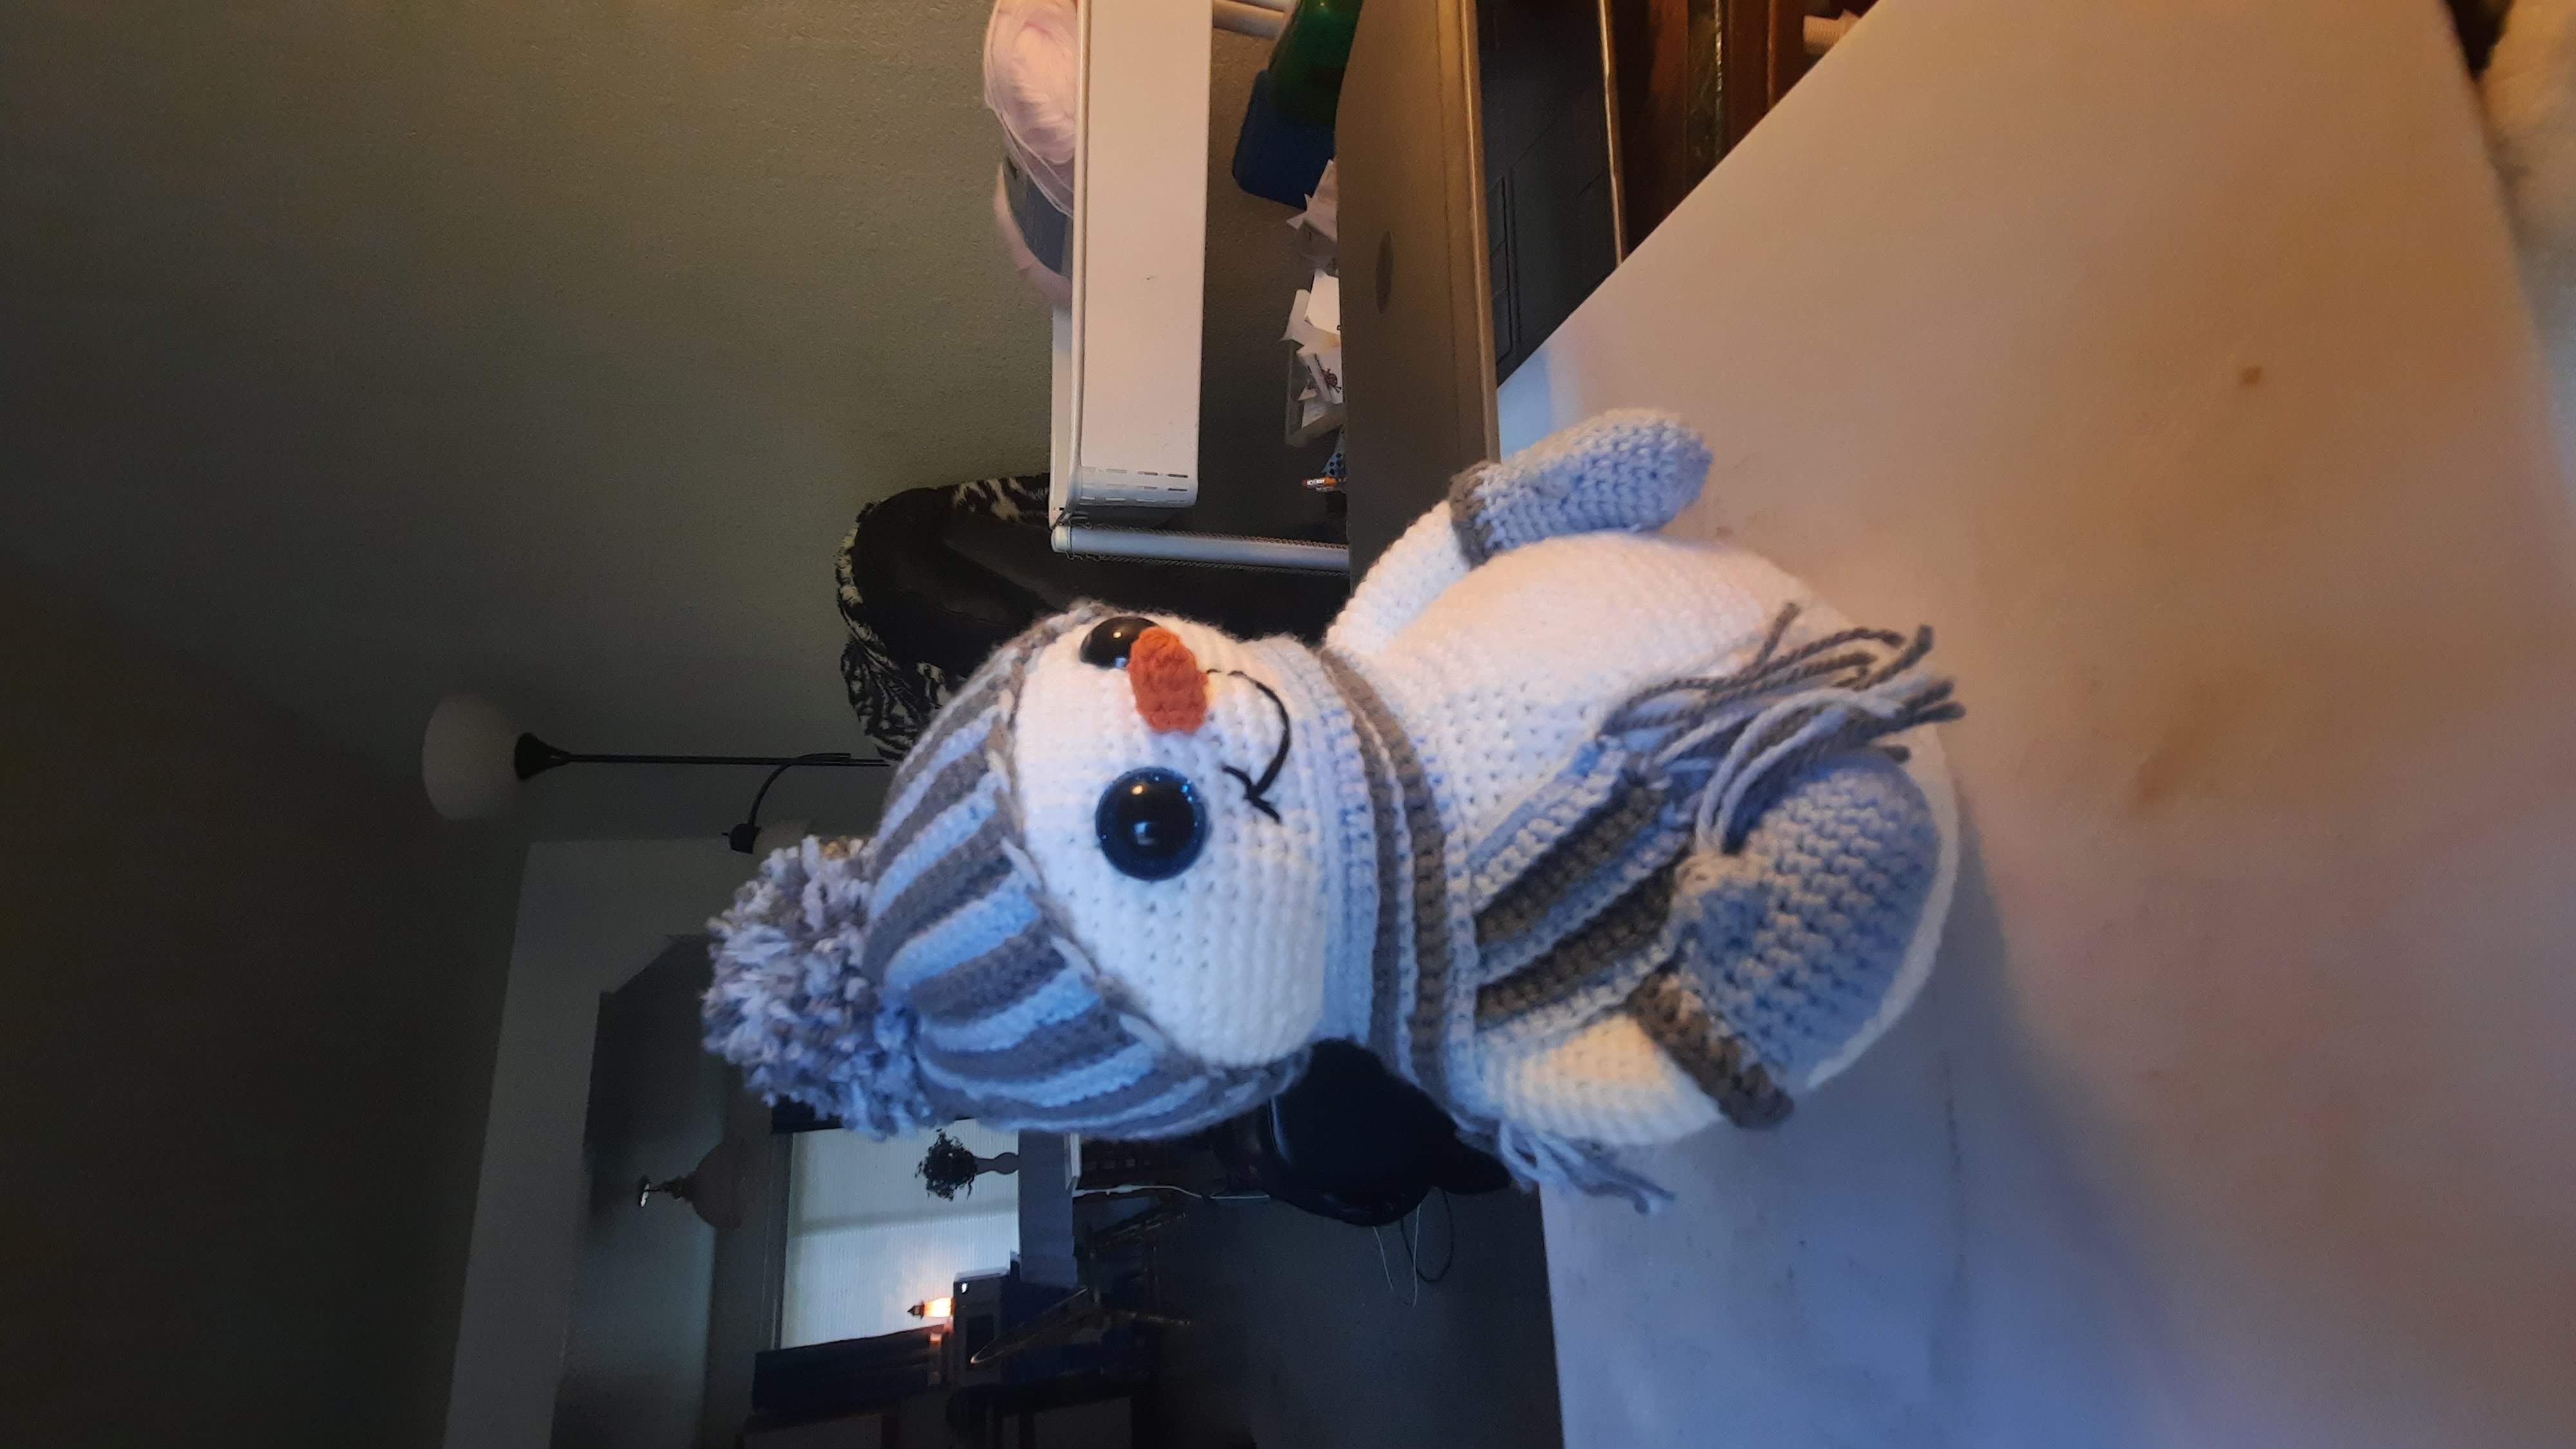 Crochet Amigurumi Snowman